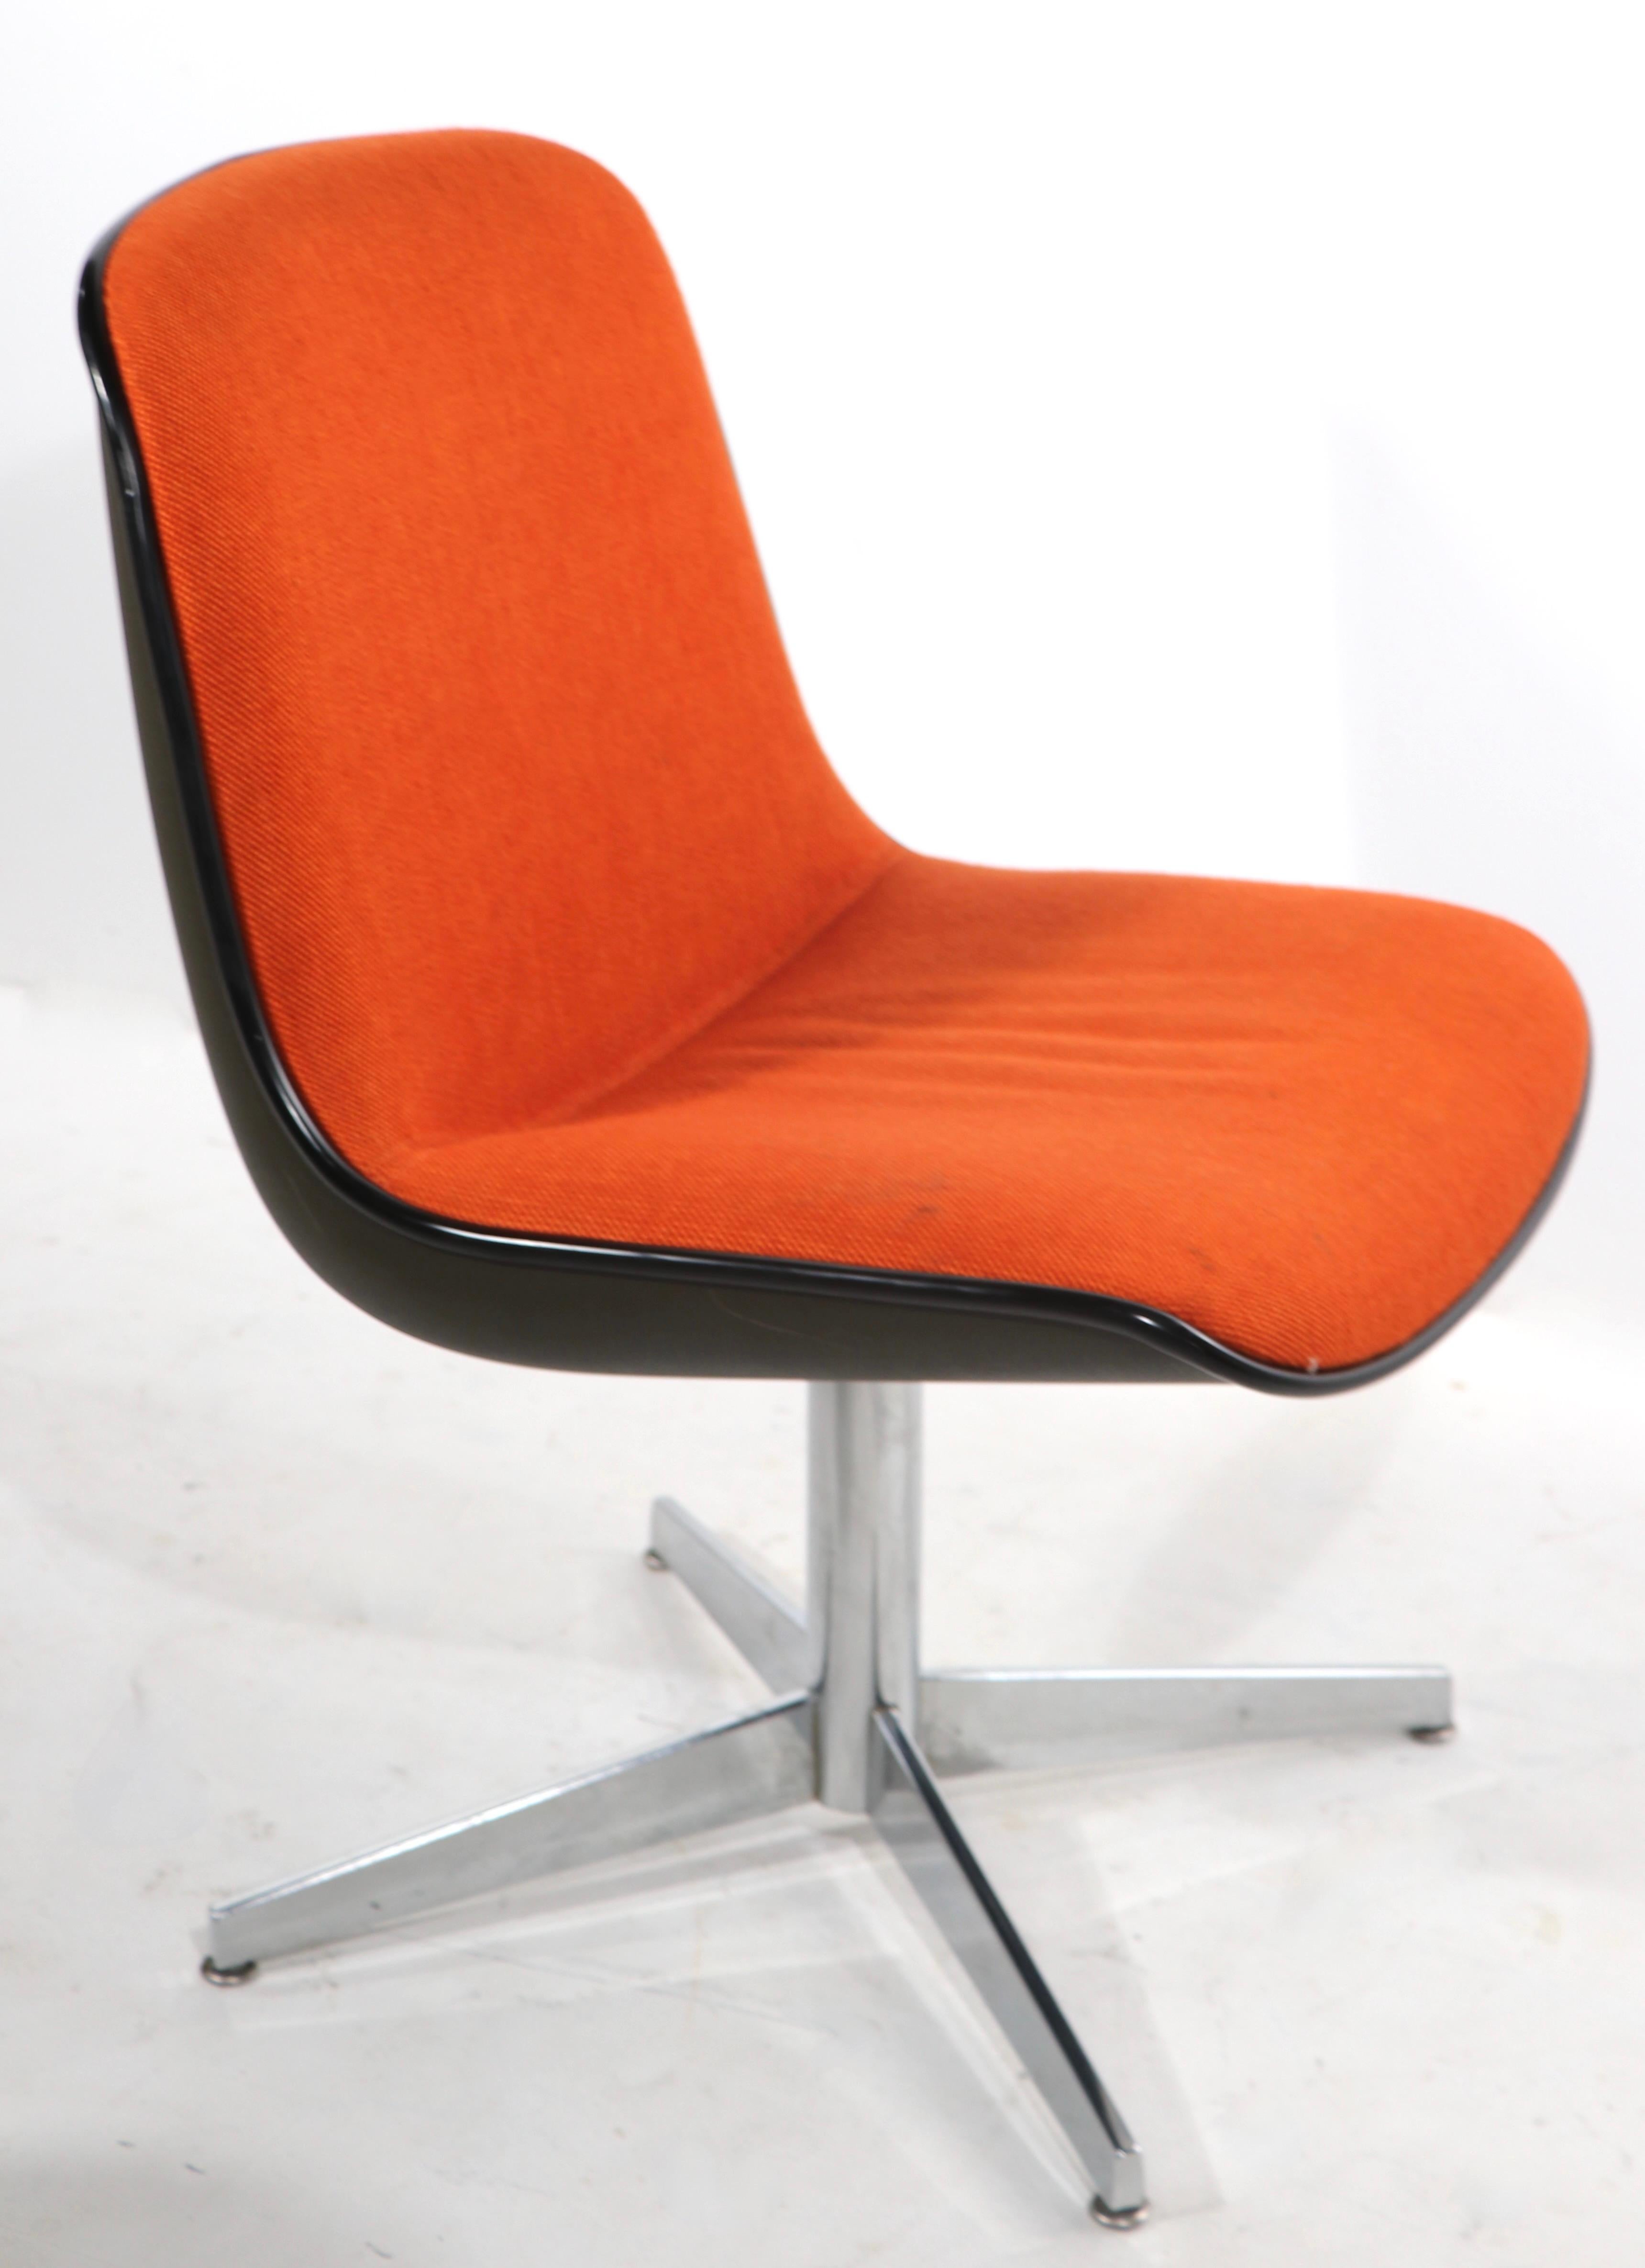 Mid-Century Modern Post Modern Office Desk Chairs by Steelcase